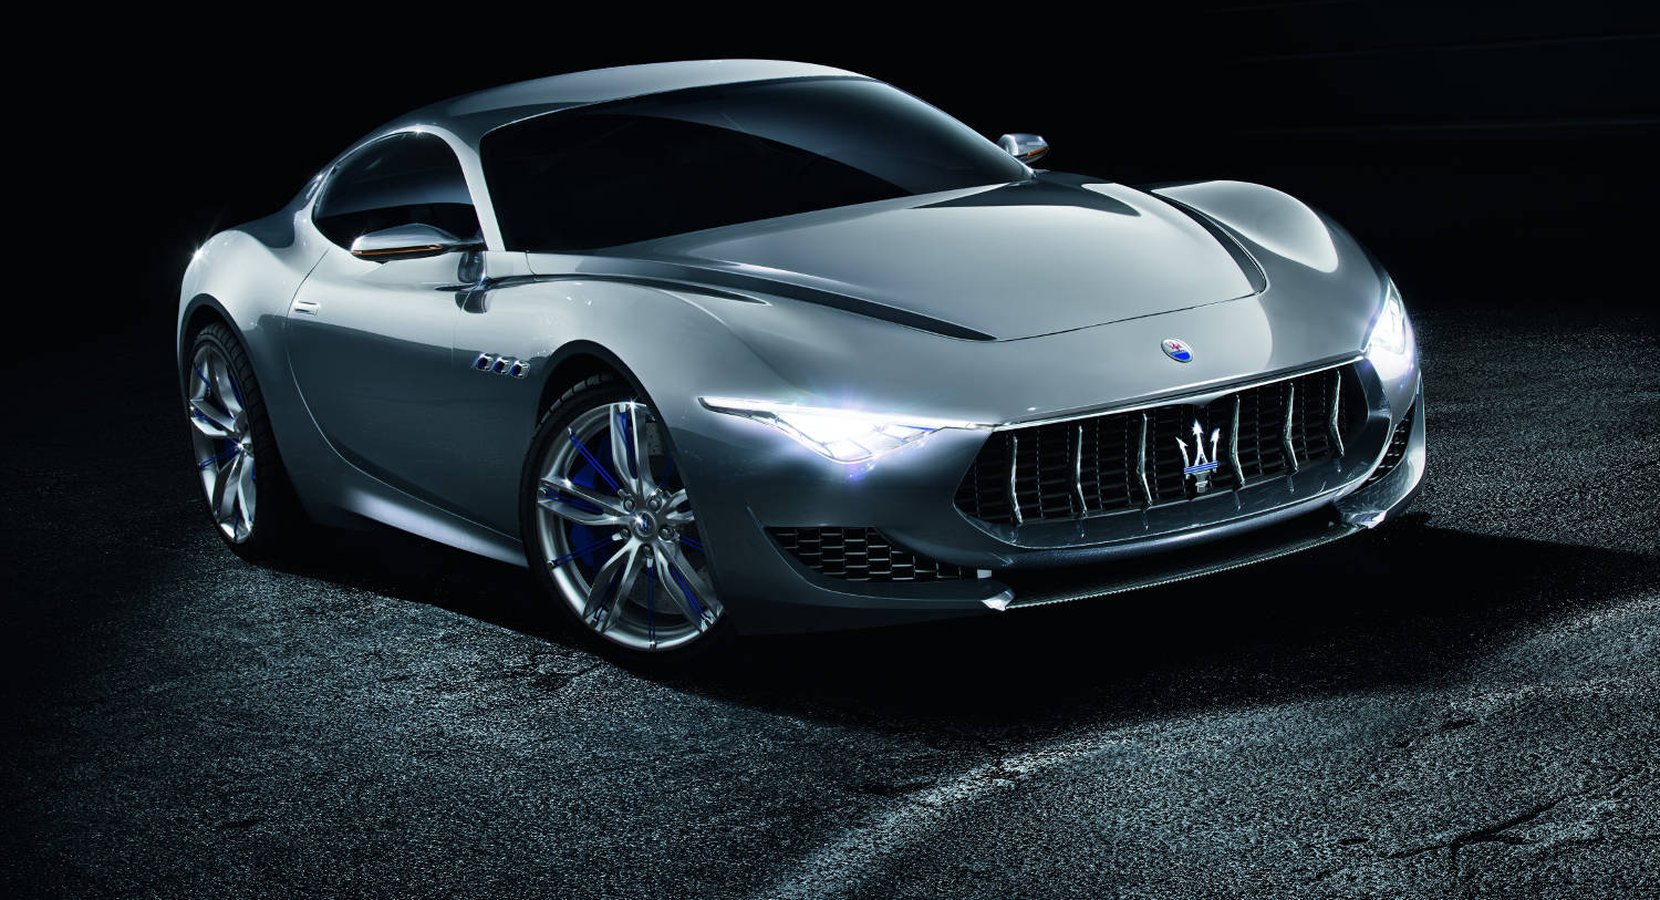 Konceptbilen Maserati Alfieri kan komma med eldrift, säger Fiat Chryslers vd Sergio Marchionne.